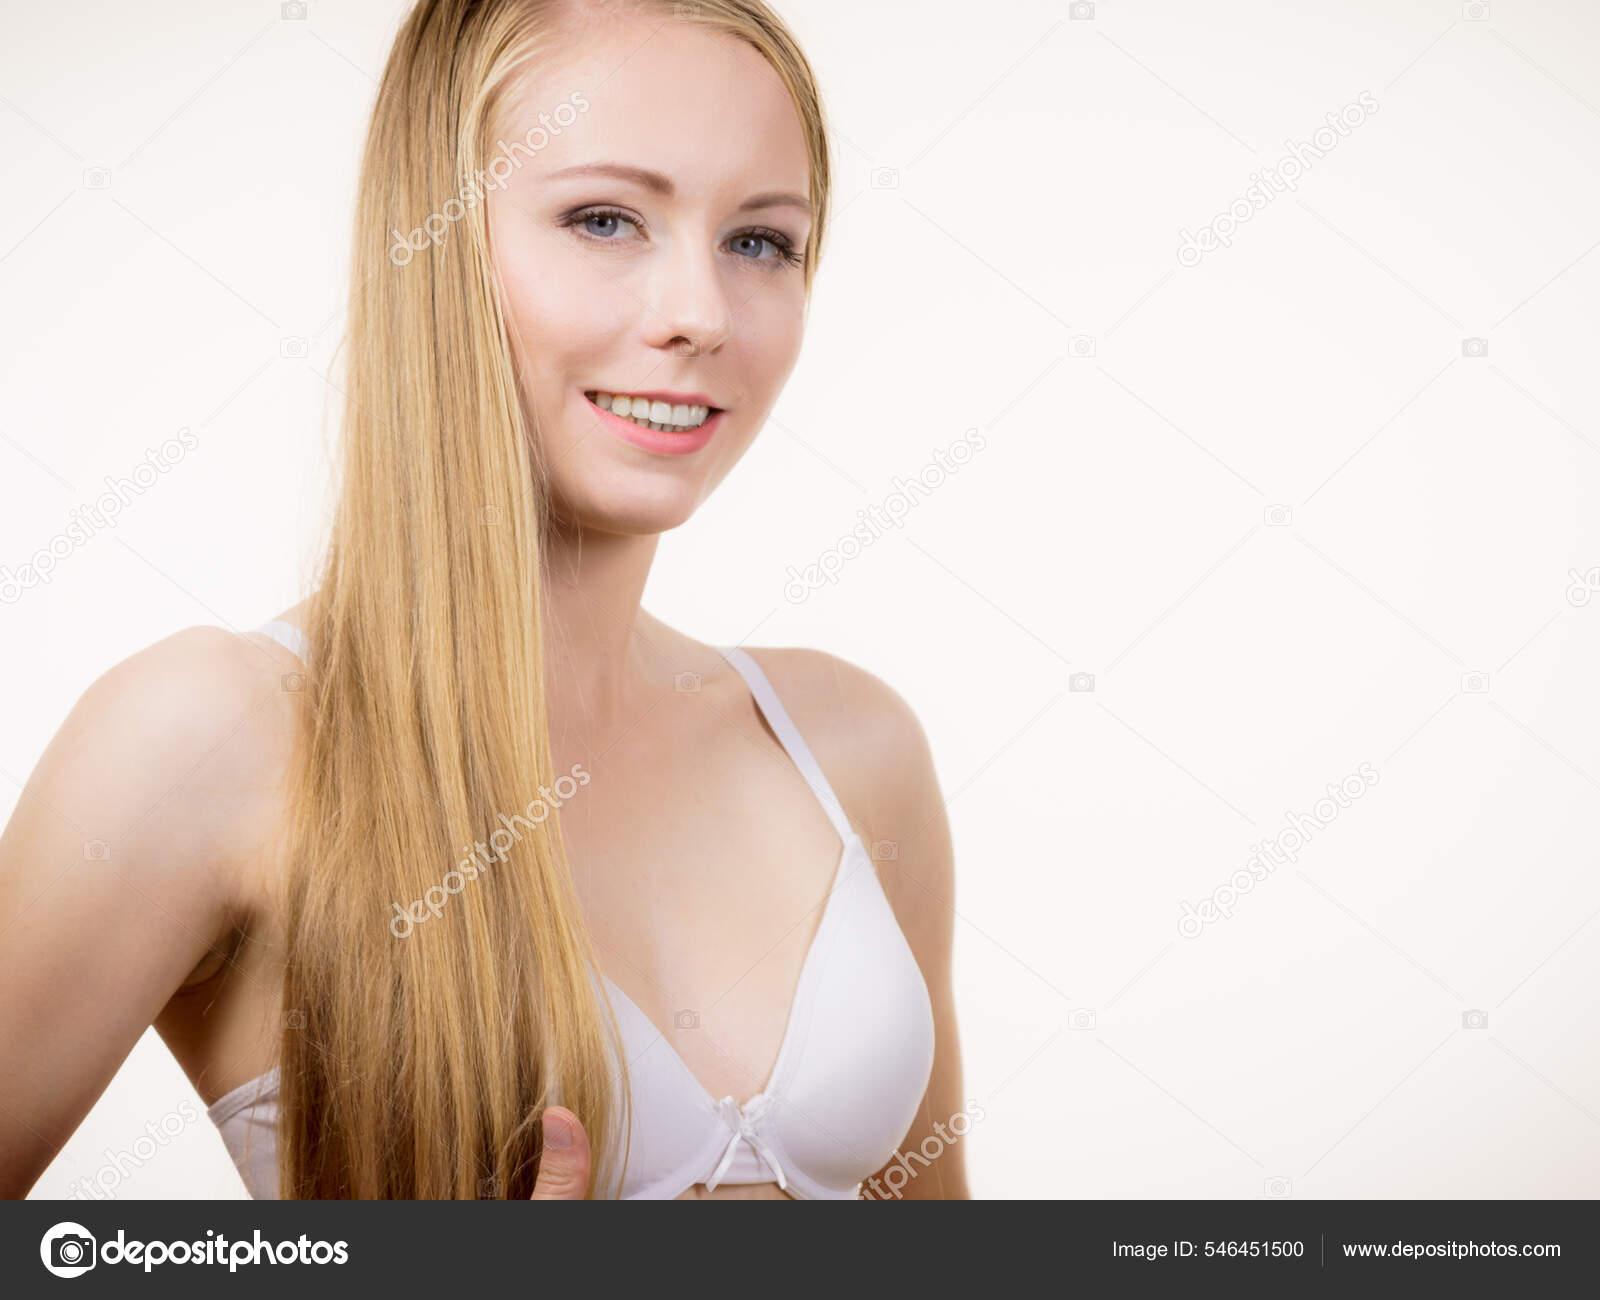 Wallpaper : women, blonde, long hair, photography, cleavage, bra